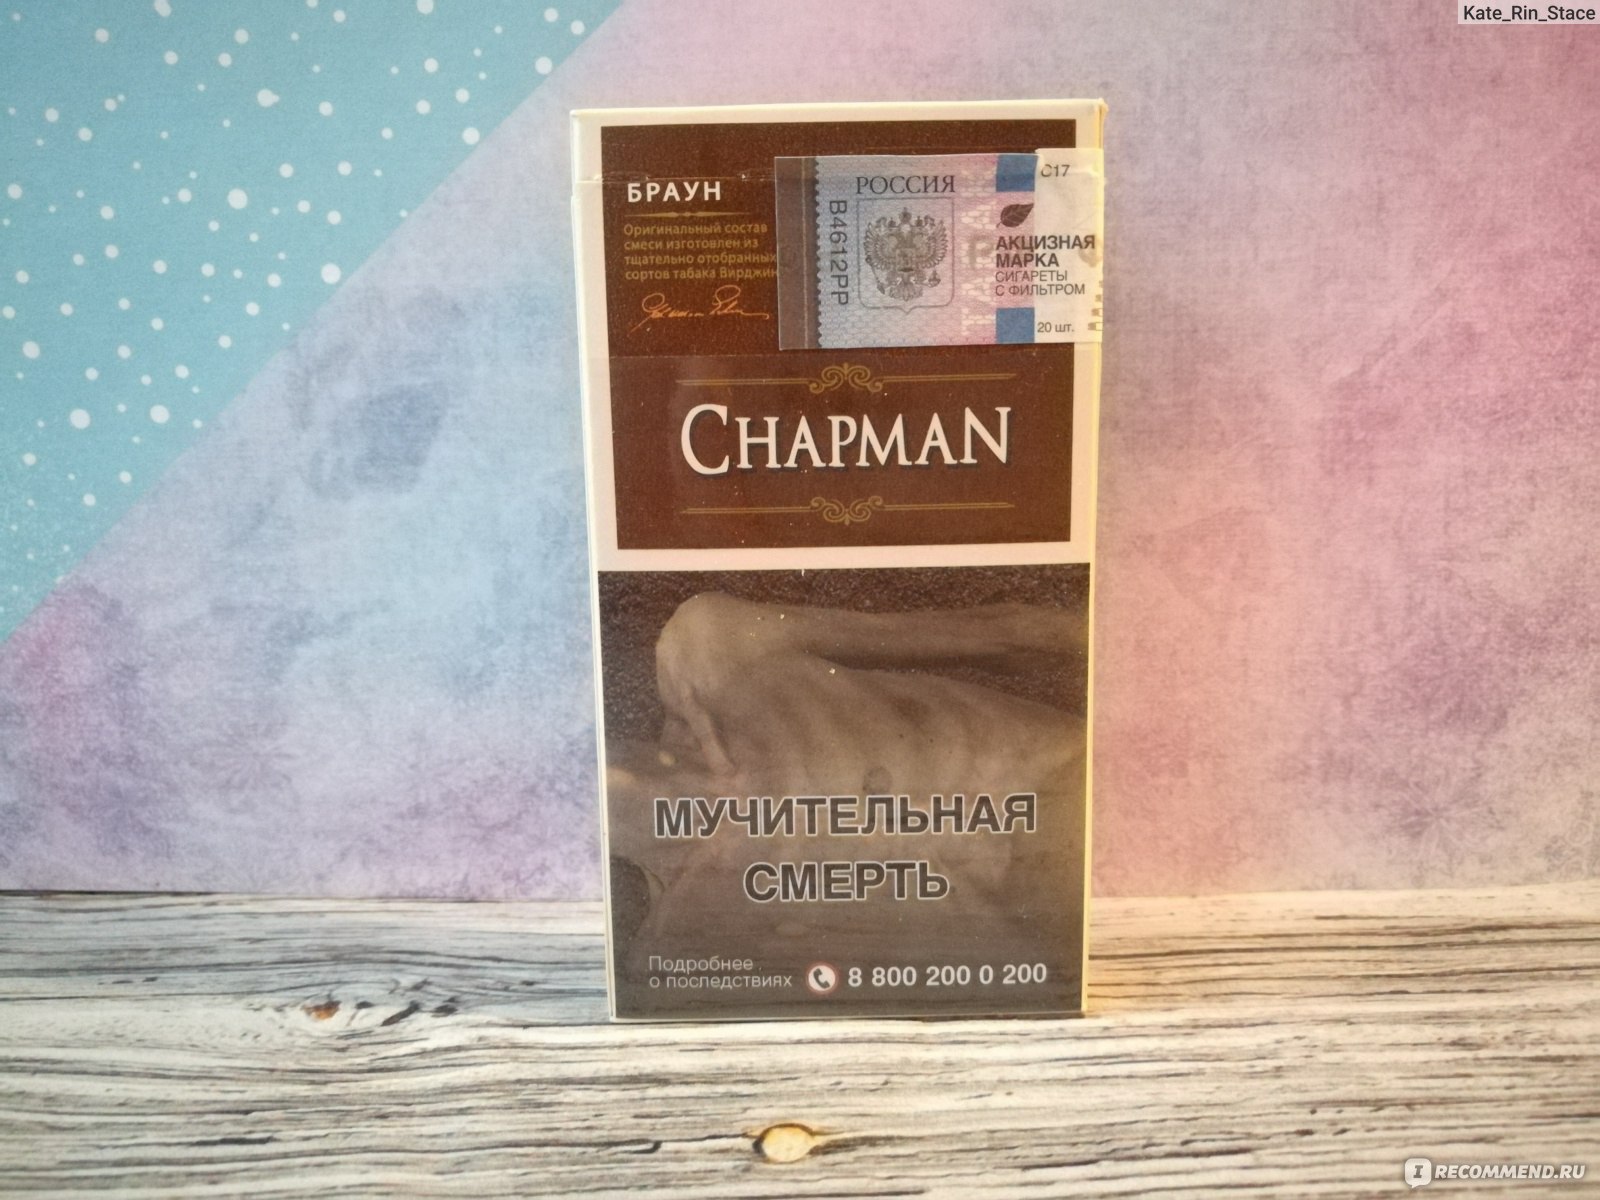 Сигареты чапман цена кб. Chapman сигареты Браун. Чапман Браун вкус.